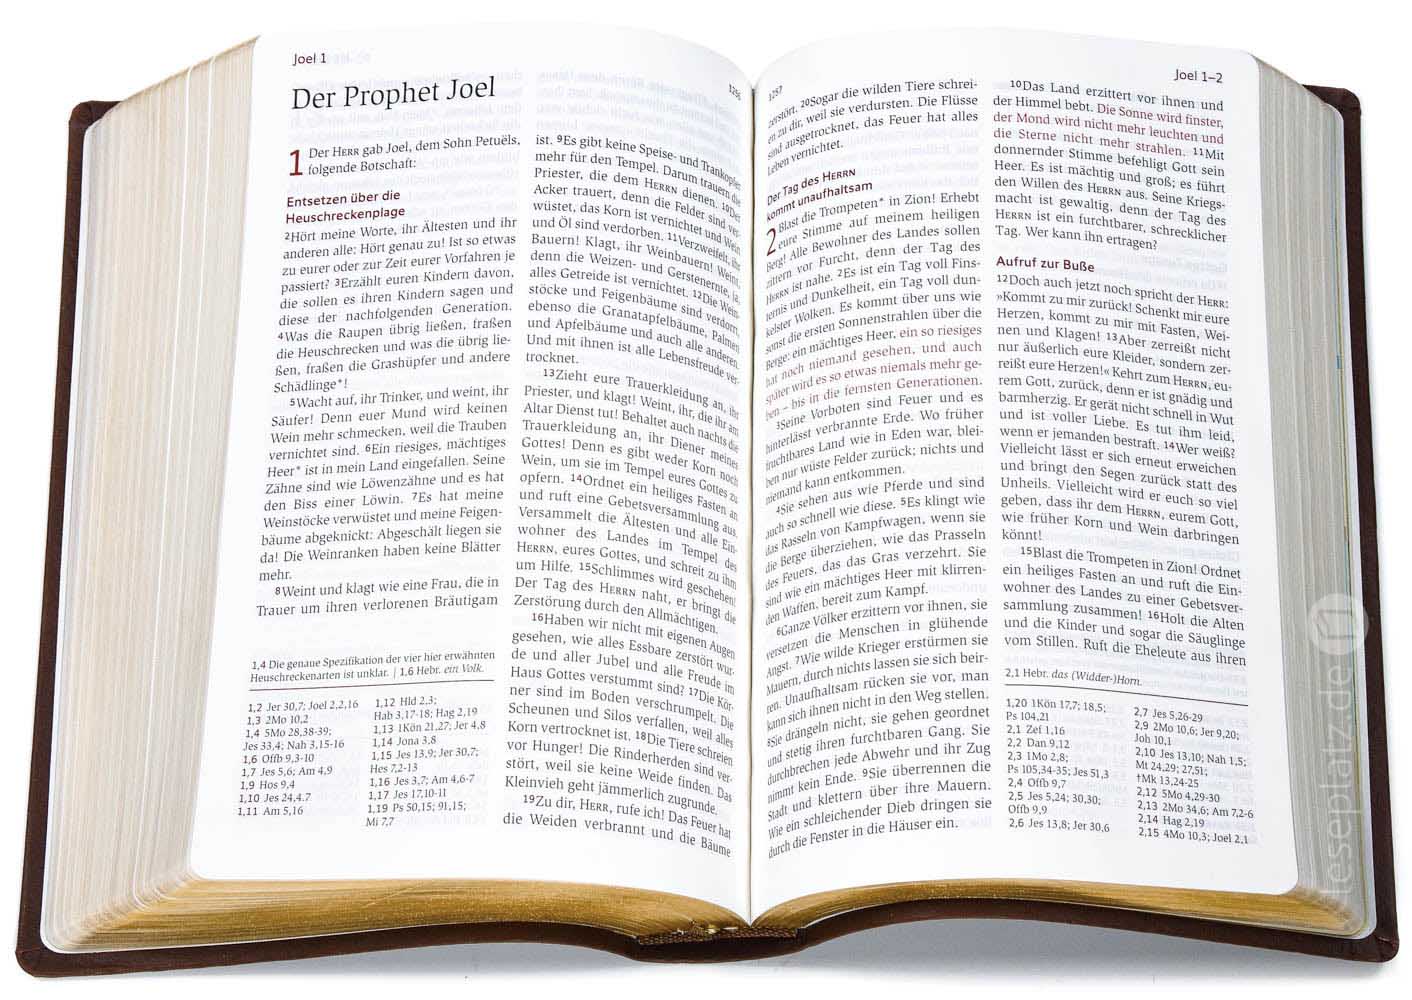 Neues Leben. Die Bibel - Standardausgabe - Kunstleder rotbraun/ Goldschnitt